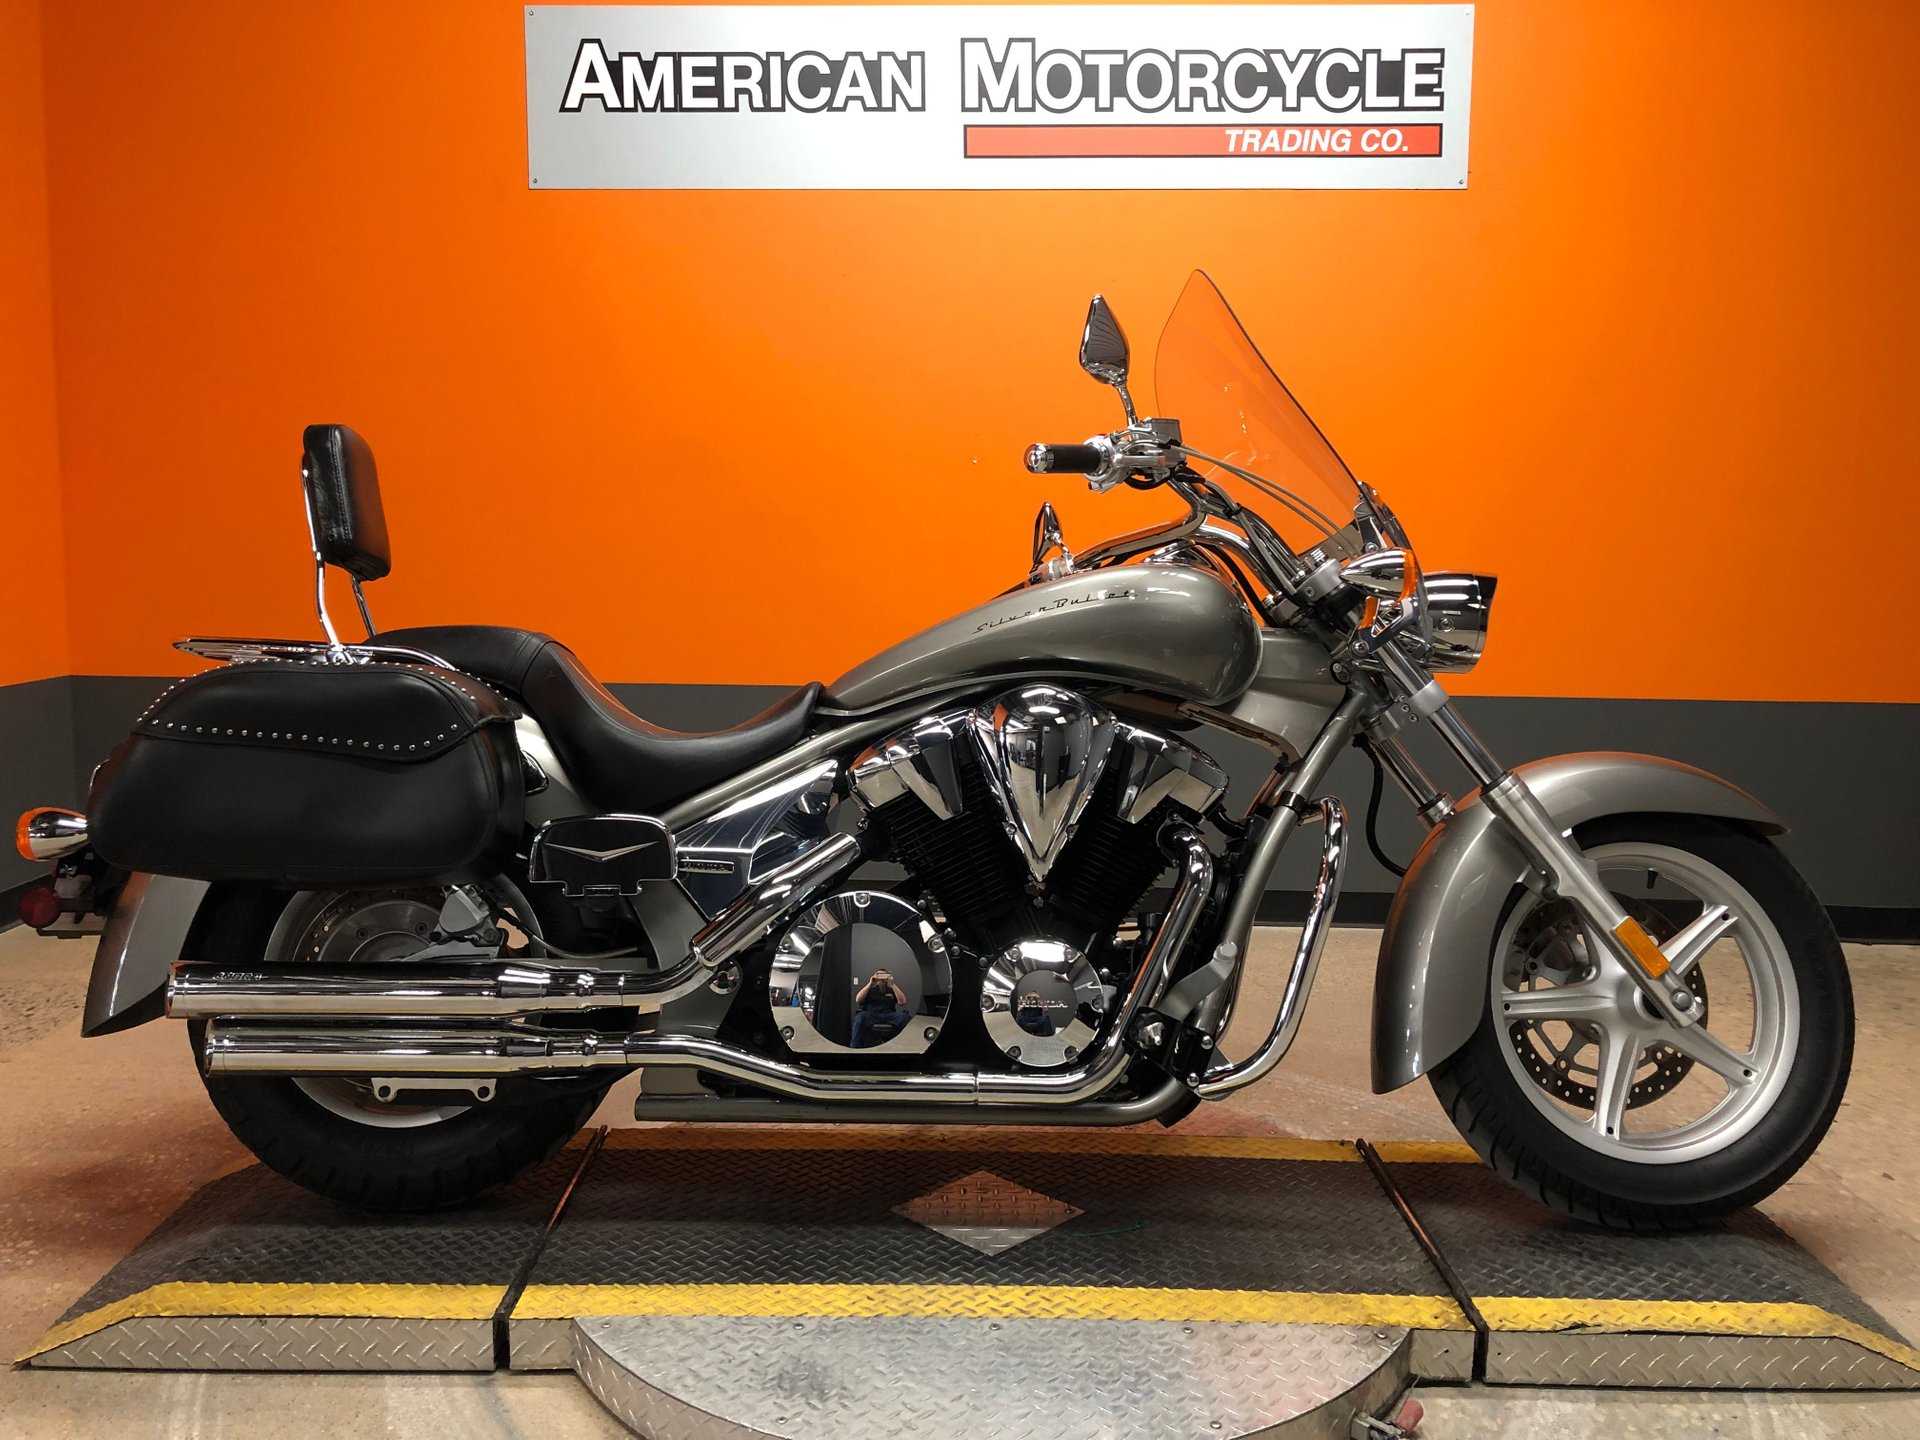 2011 Honda VT1300CR | American Motorcycle Trading Company - Used Harley ...